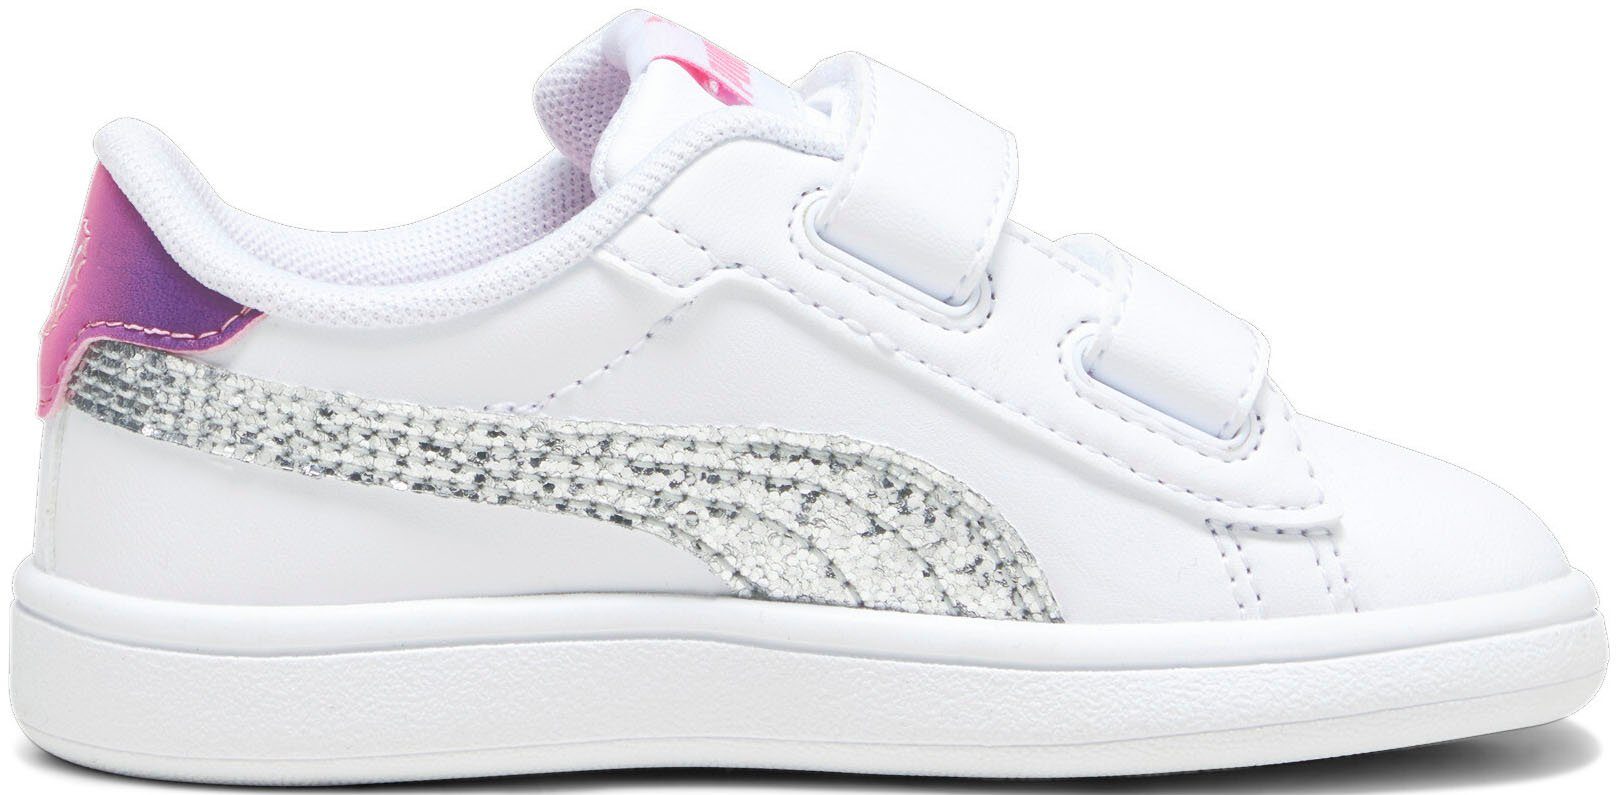 INF Sneaker PUMA Pop GLOW STAR White-PUMA Burst-Purple V Silver-Strawberry PUMA SMASH 3.0 L